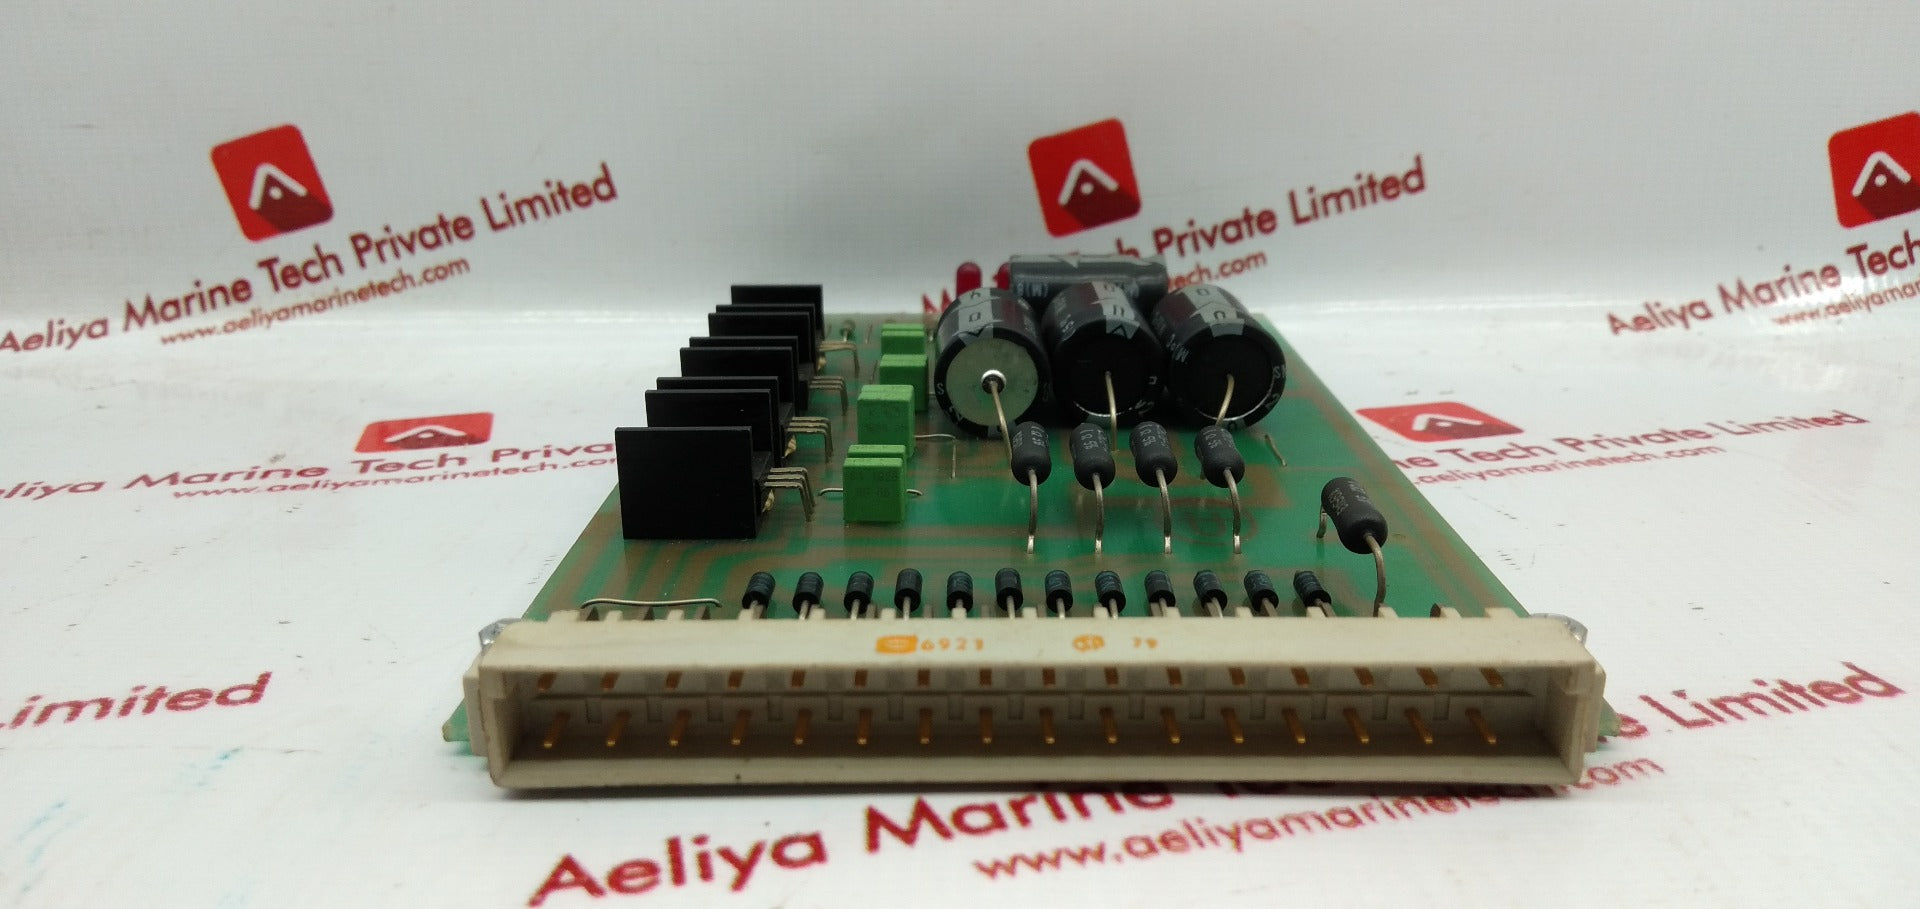 Autronica S-386060 Pcb Card Printed Circuit Board